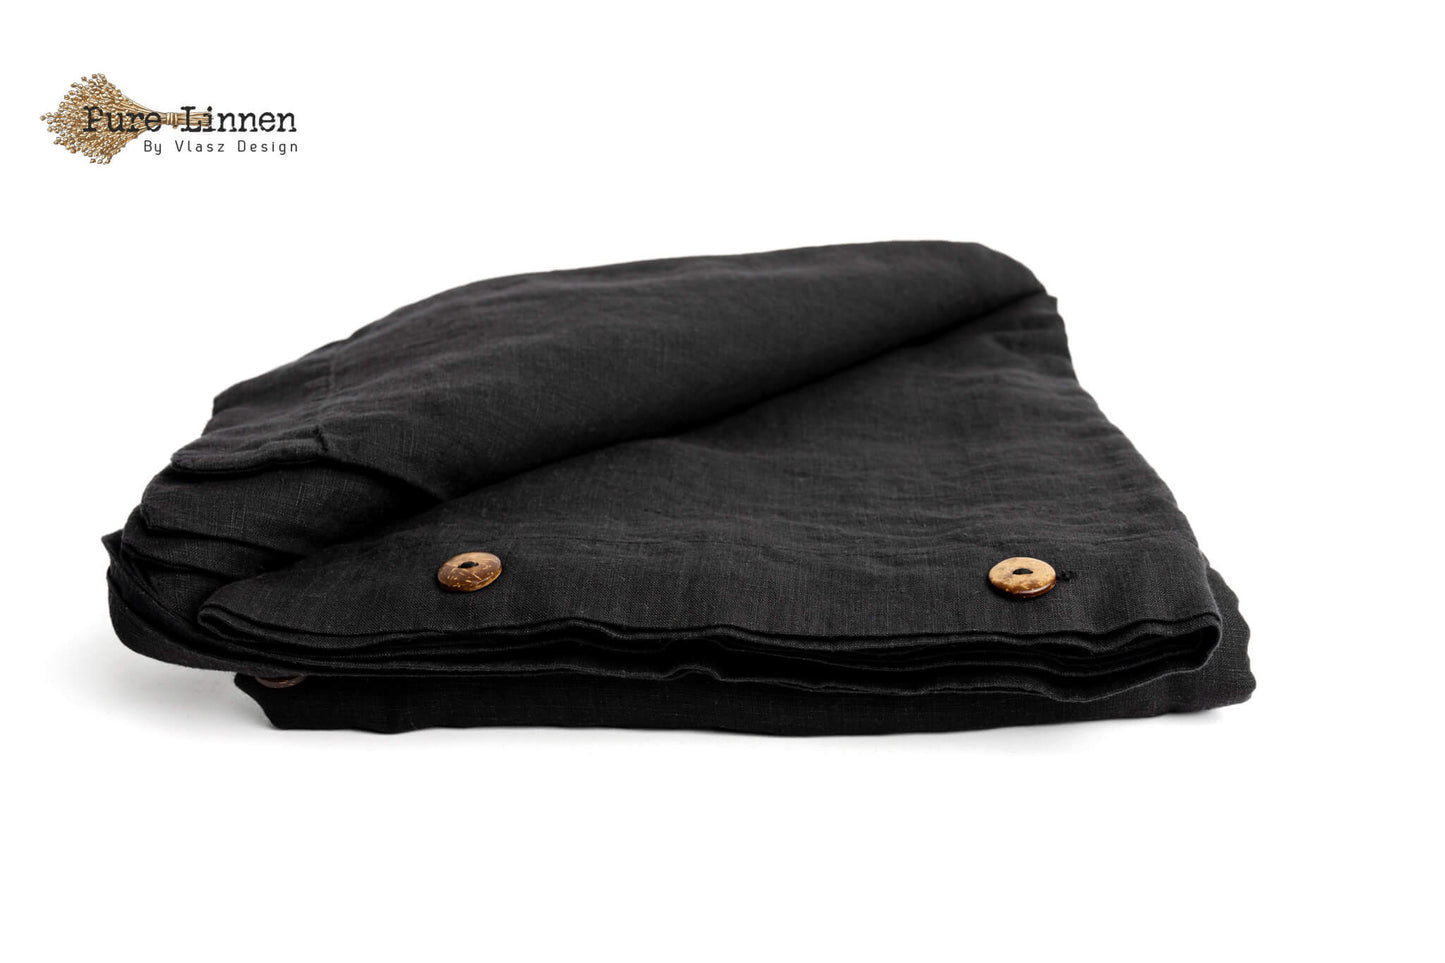 Linen Duvet Cover Black/Buttons - Pure Linen